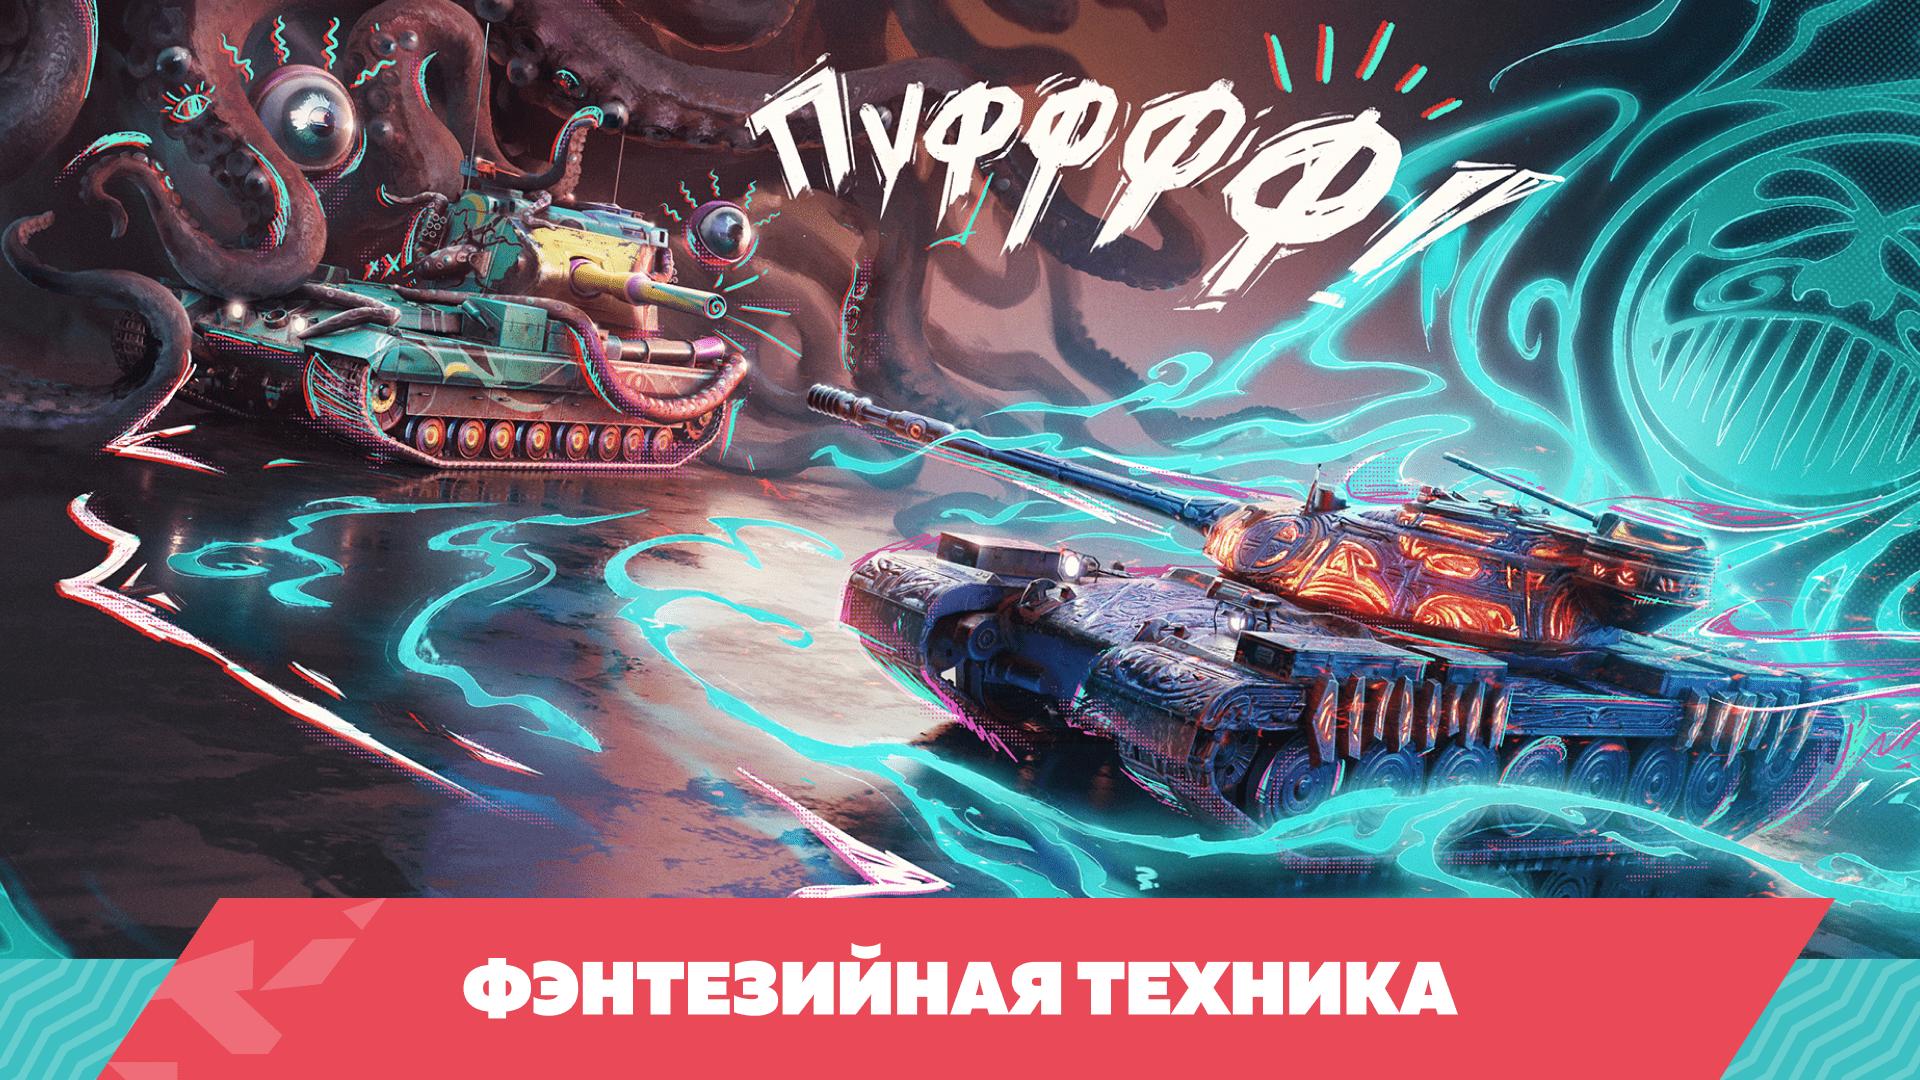 Tanks Blitz PVP. Tanks Blitz - PVP mmo. Tank Blitz PVP битвы East. Tanks Blitz PVP битвы poster.